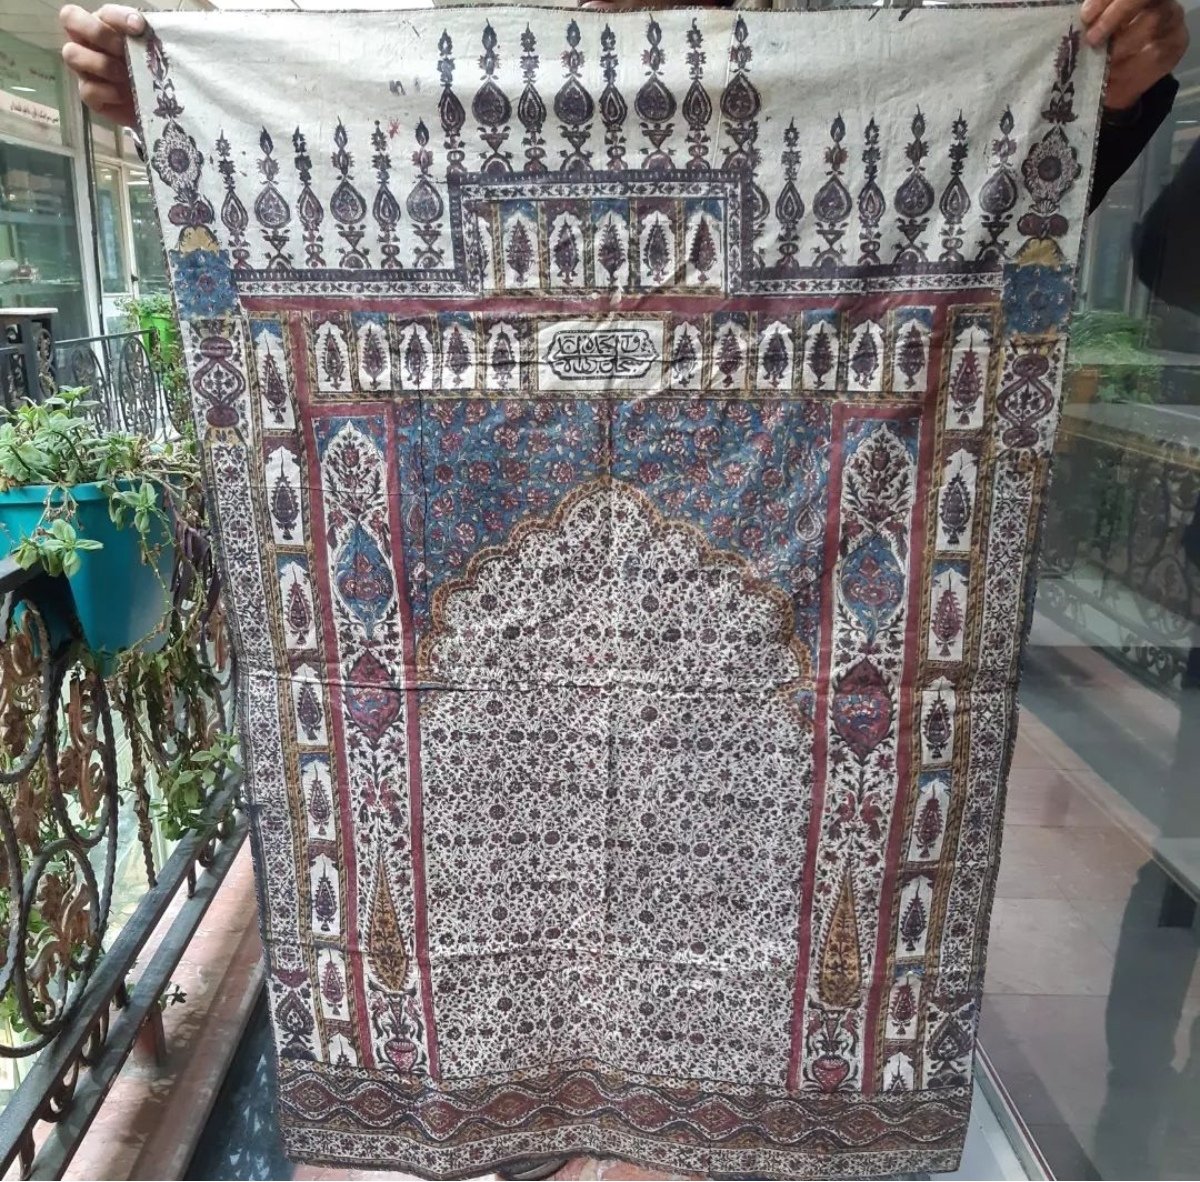 Antique kalamkari, Persia, 19th century #antiques #collection #antiquetextiles #decor #interiordecor #orientalart #islamicart #textilecollection #blockprint #handmadetextile